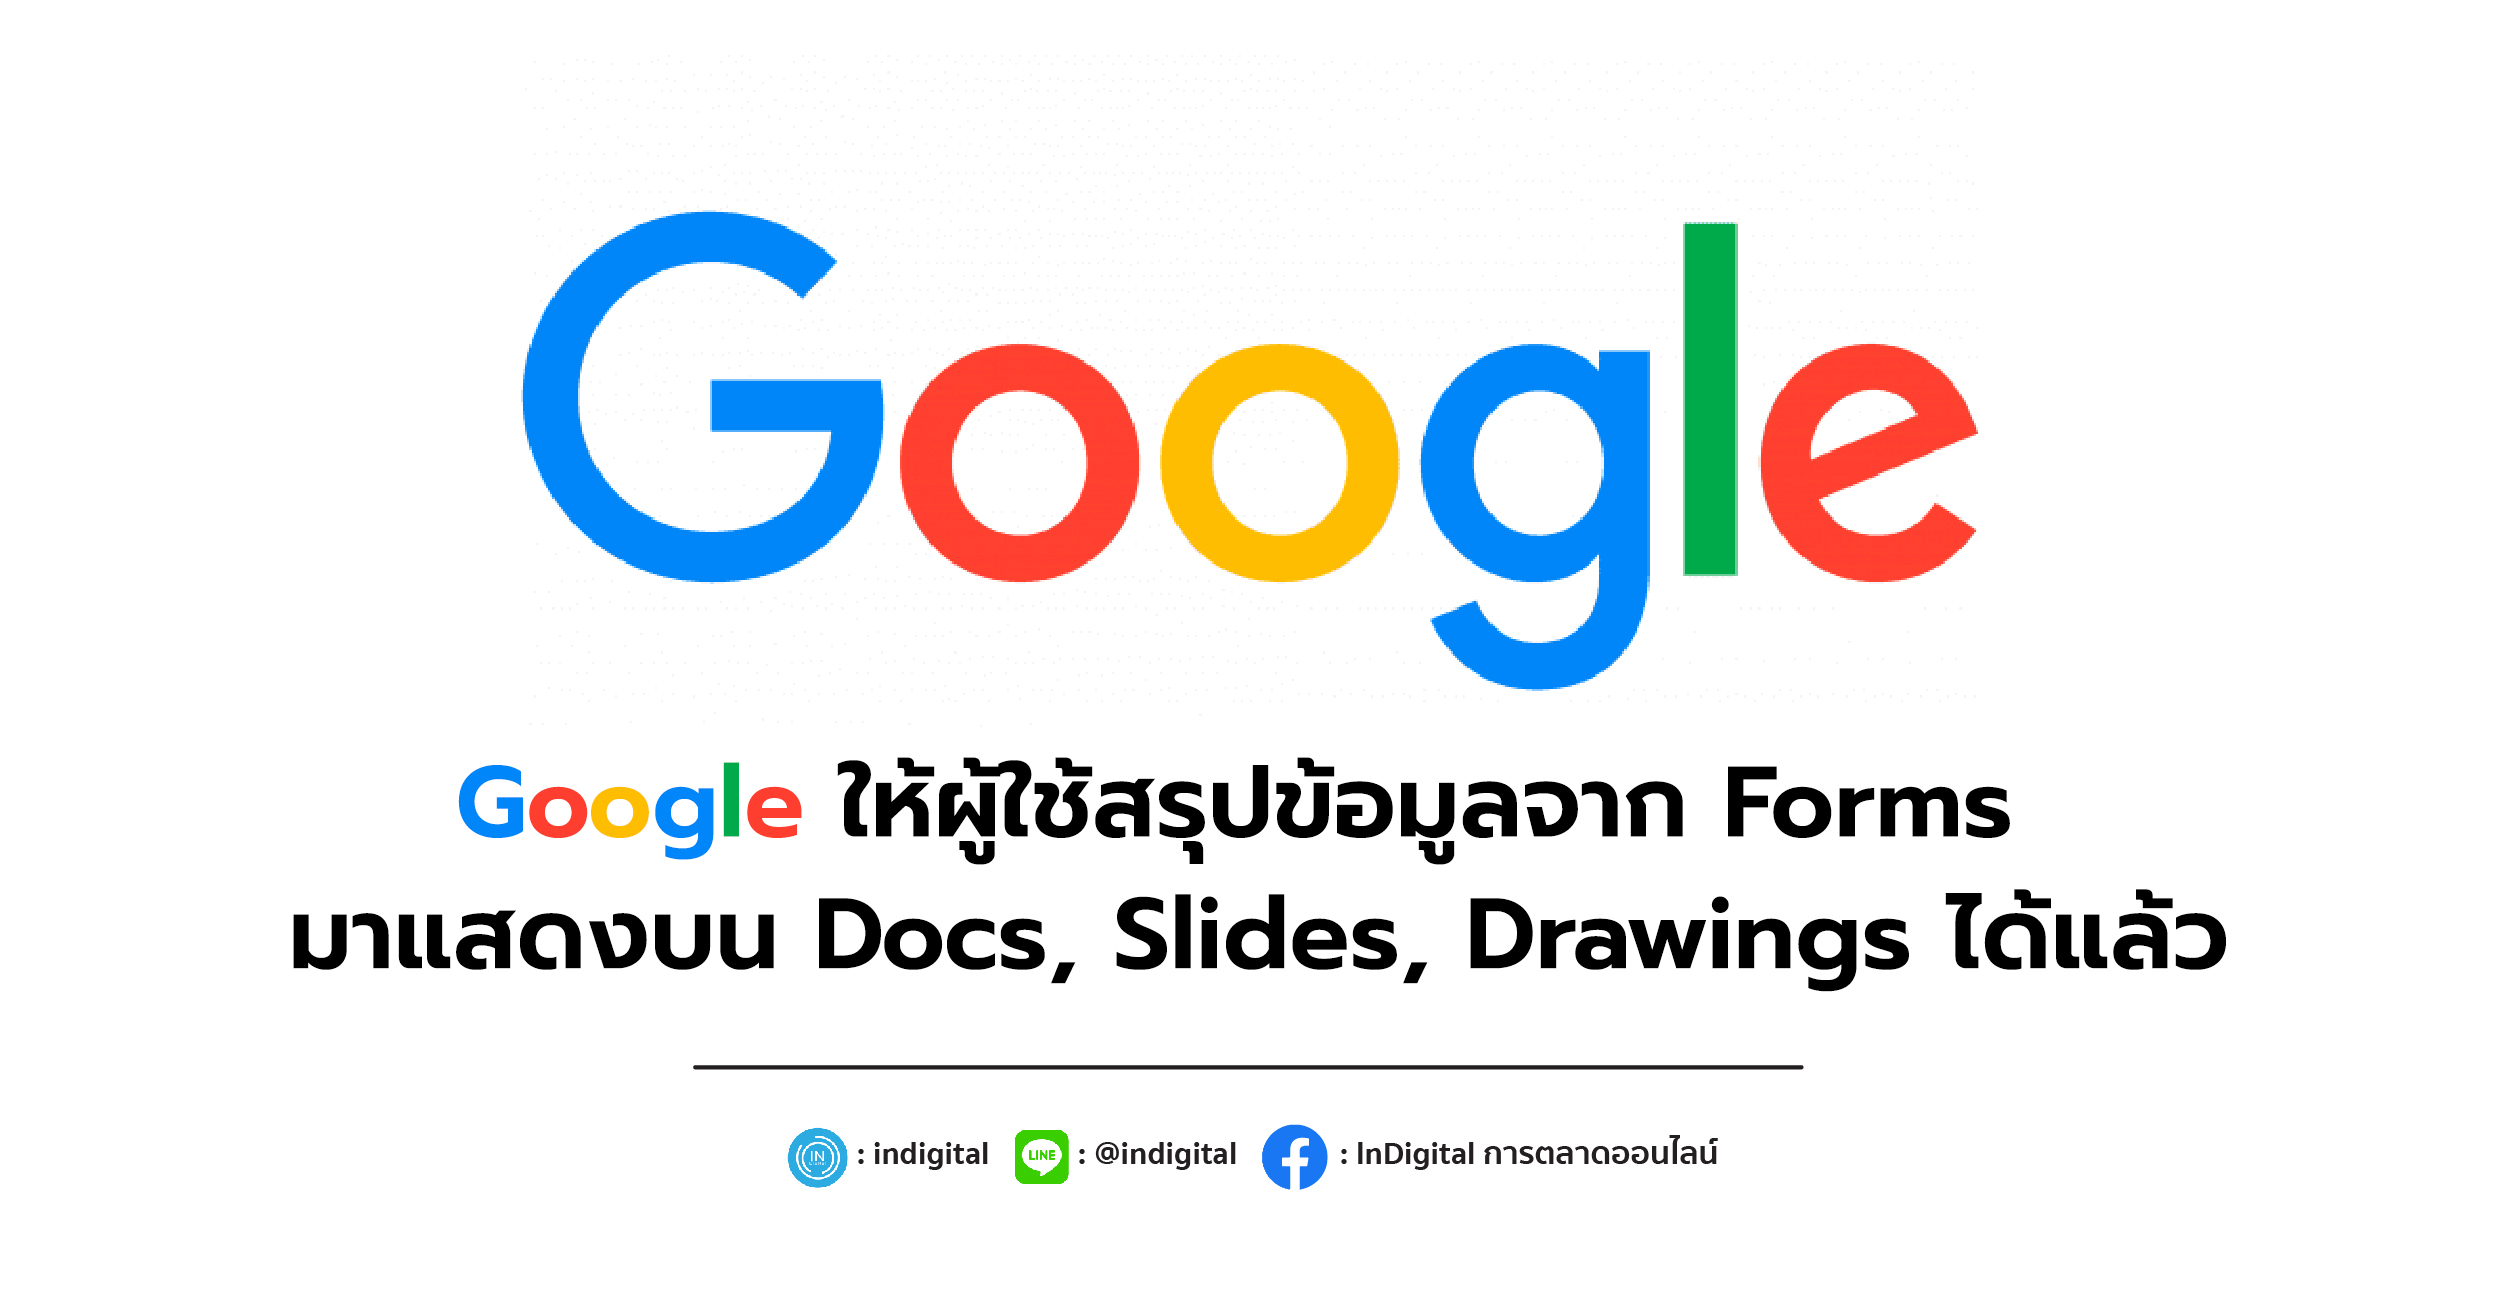 Google ให้ผู้ใช้สรุปข้อมูลจาก Forms มาแสดงบน Docs, Slides, Drawings ได้แล้ว